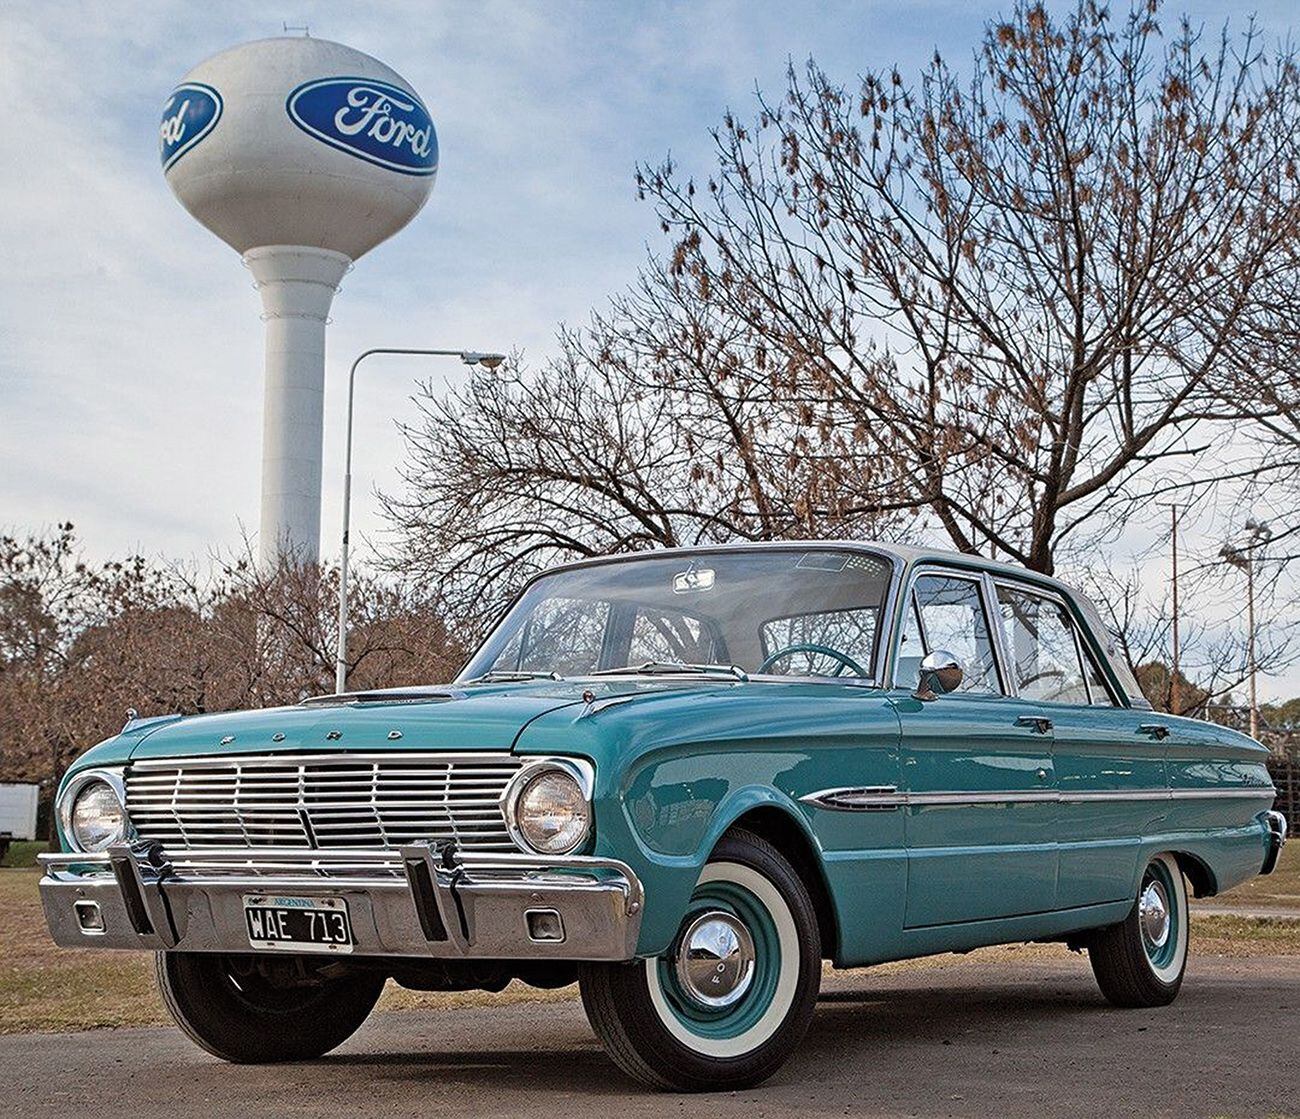 Ford Falcon, un hito de la historia de la industria nacional